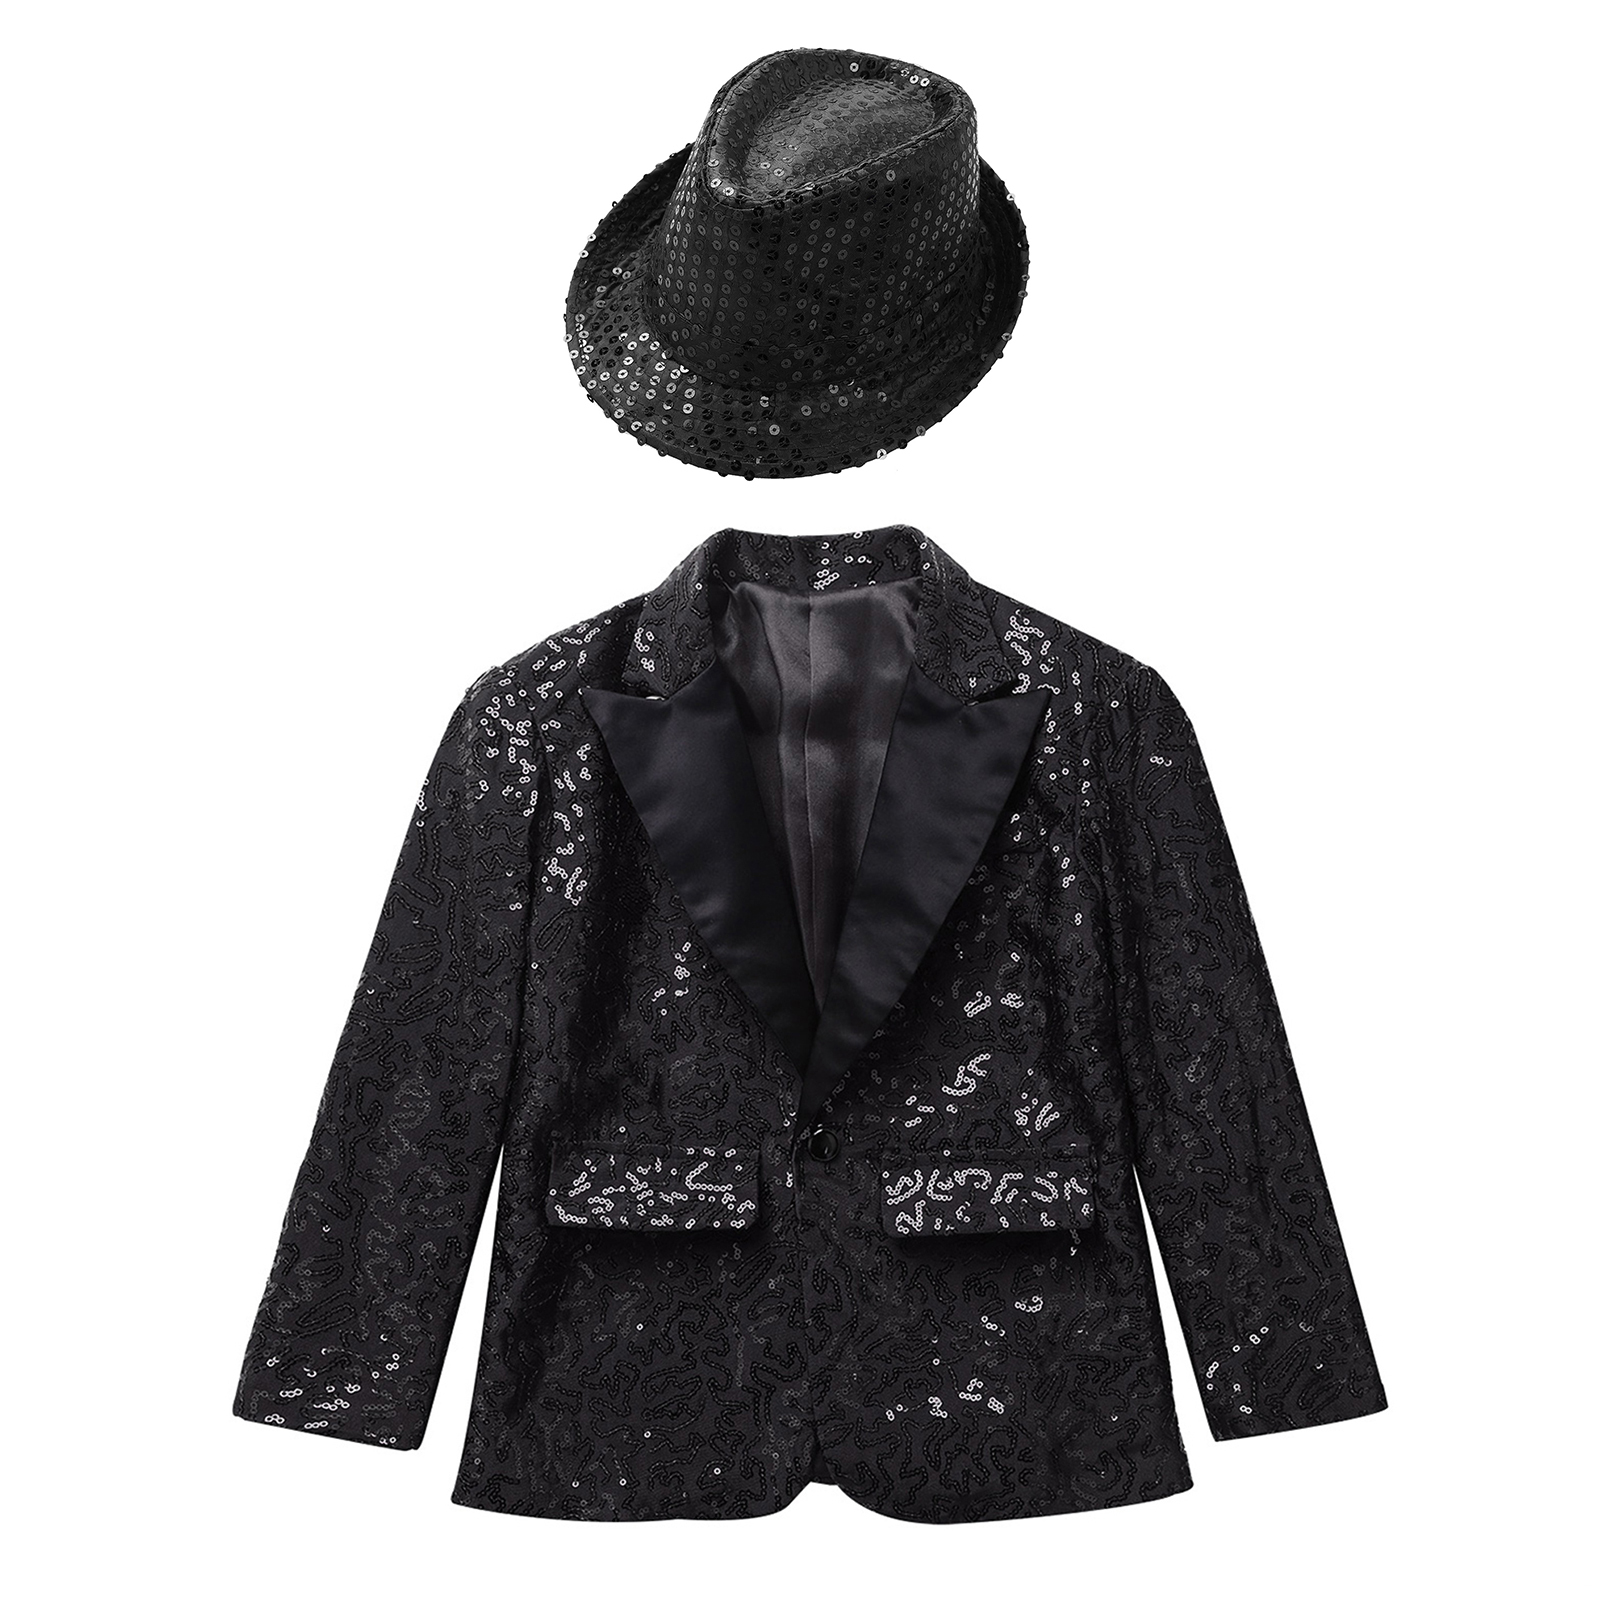 MSemis Kids Boys Shiny Sequin Suit Jacket Party Blazer Dance Tuxedo Costume with Hat,Size 6-16 Black 10 - image 3 of 6